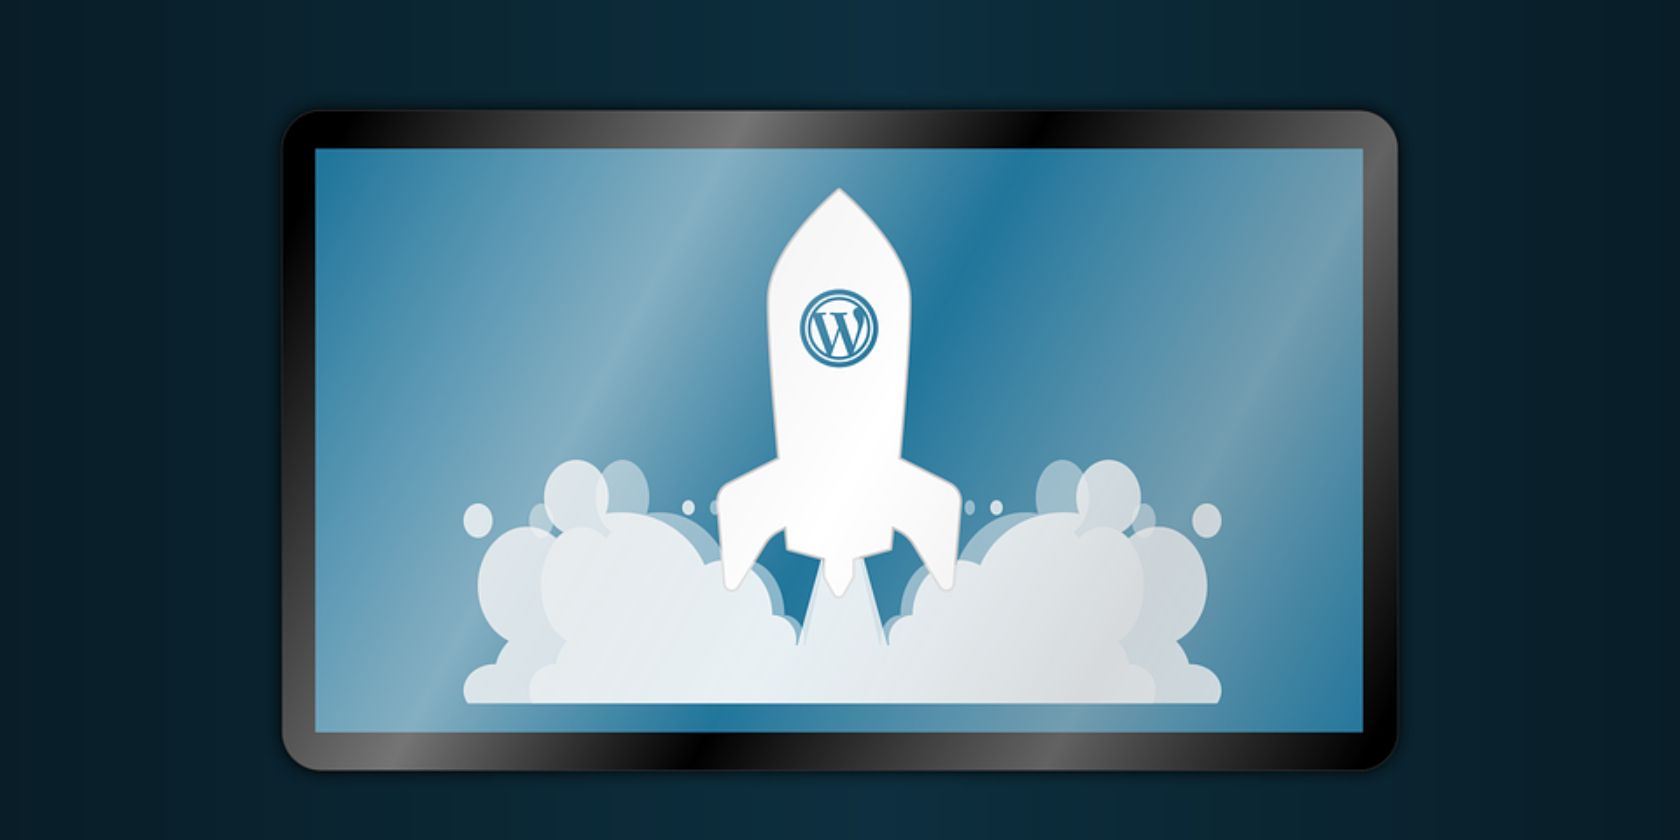 wordpress logo on a screen